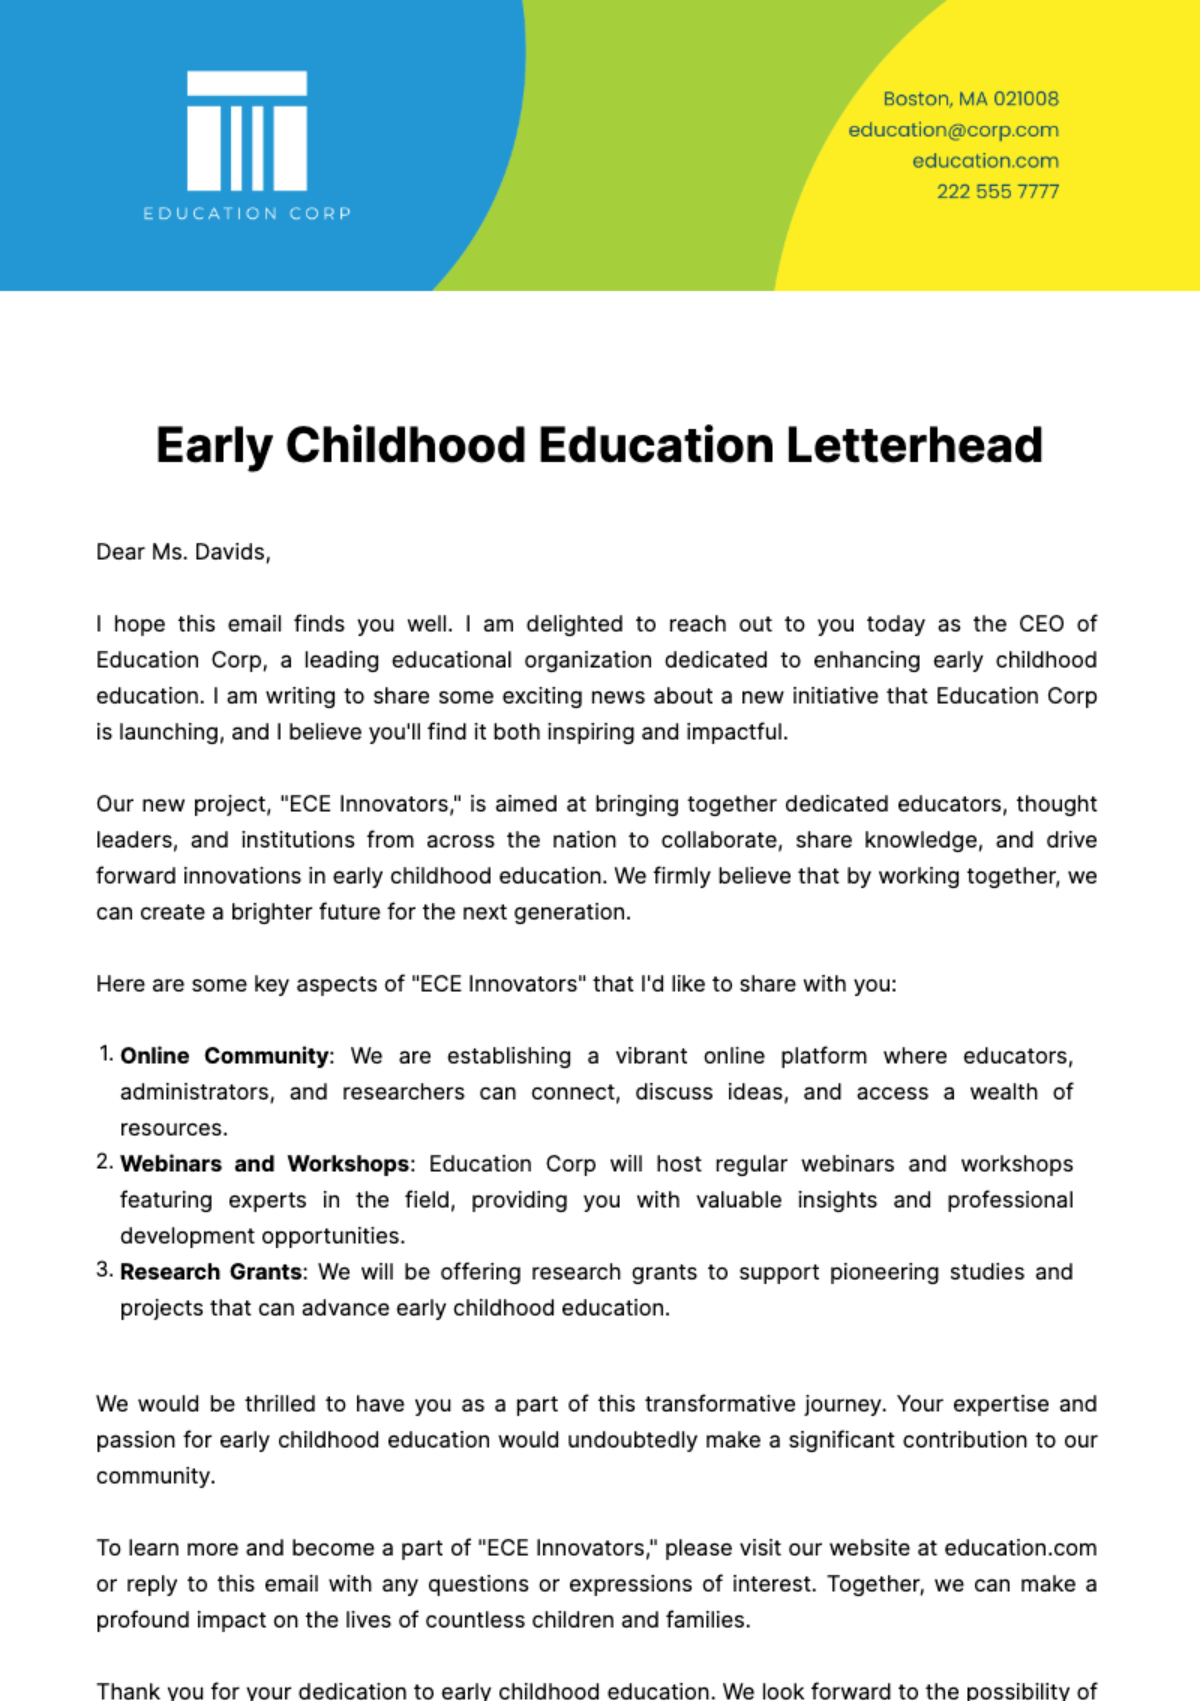 Free Early Childhood Education Letterhead Template